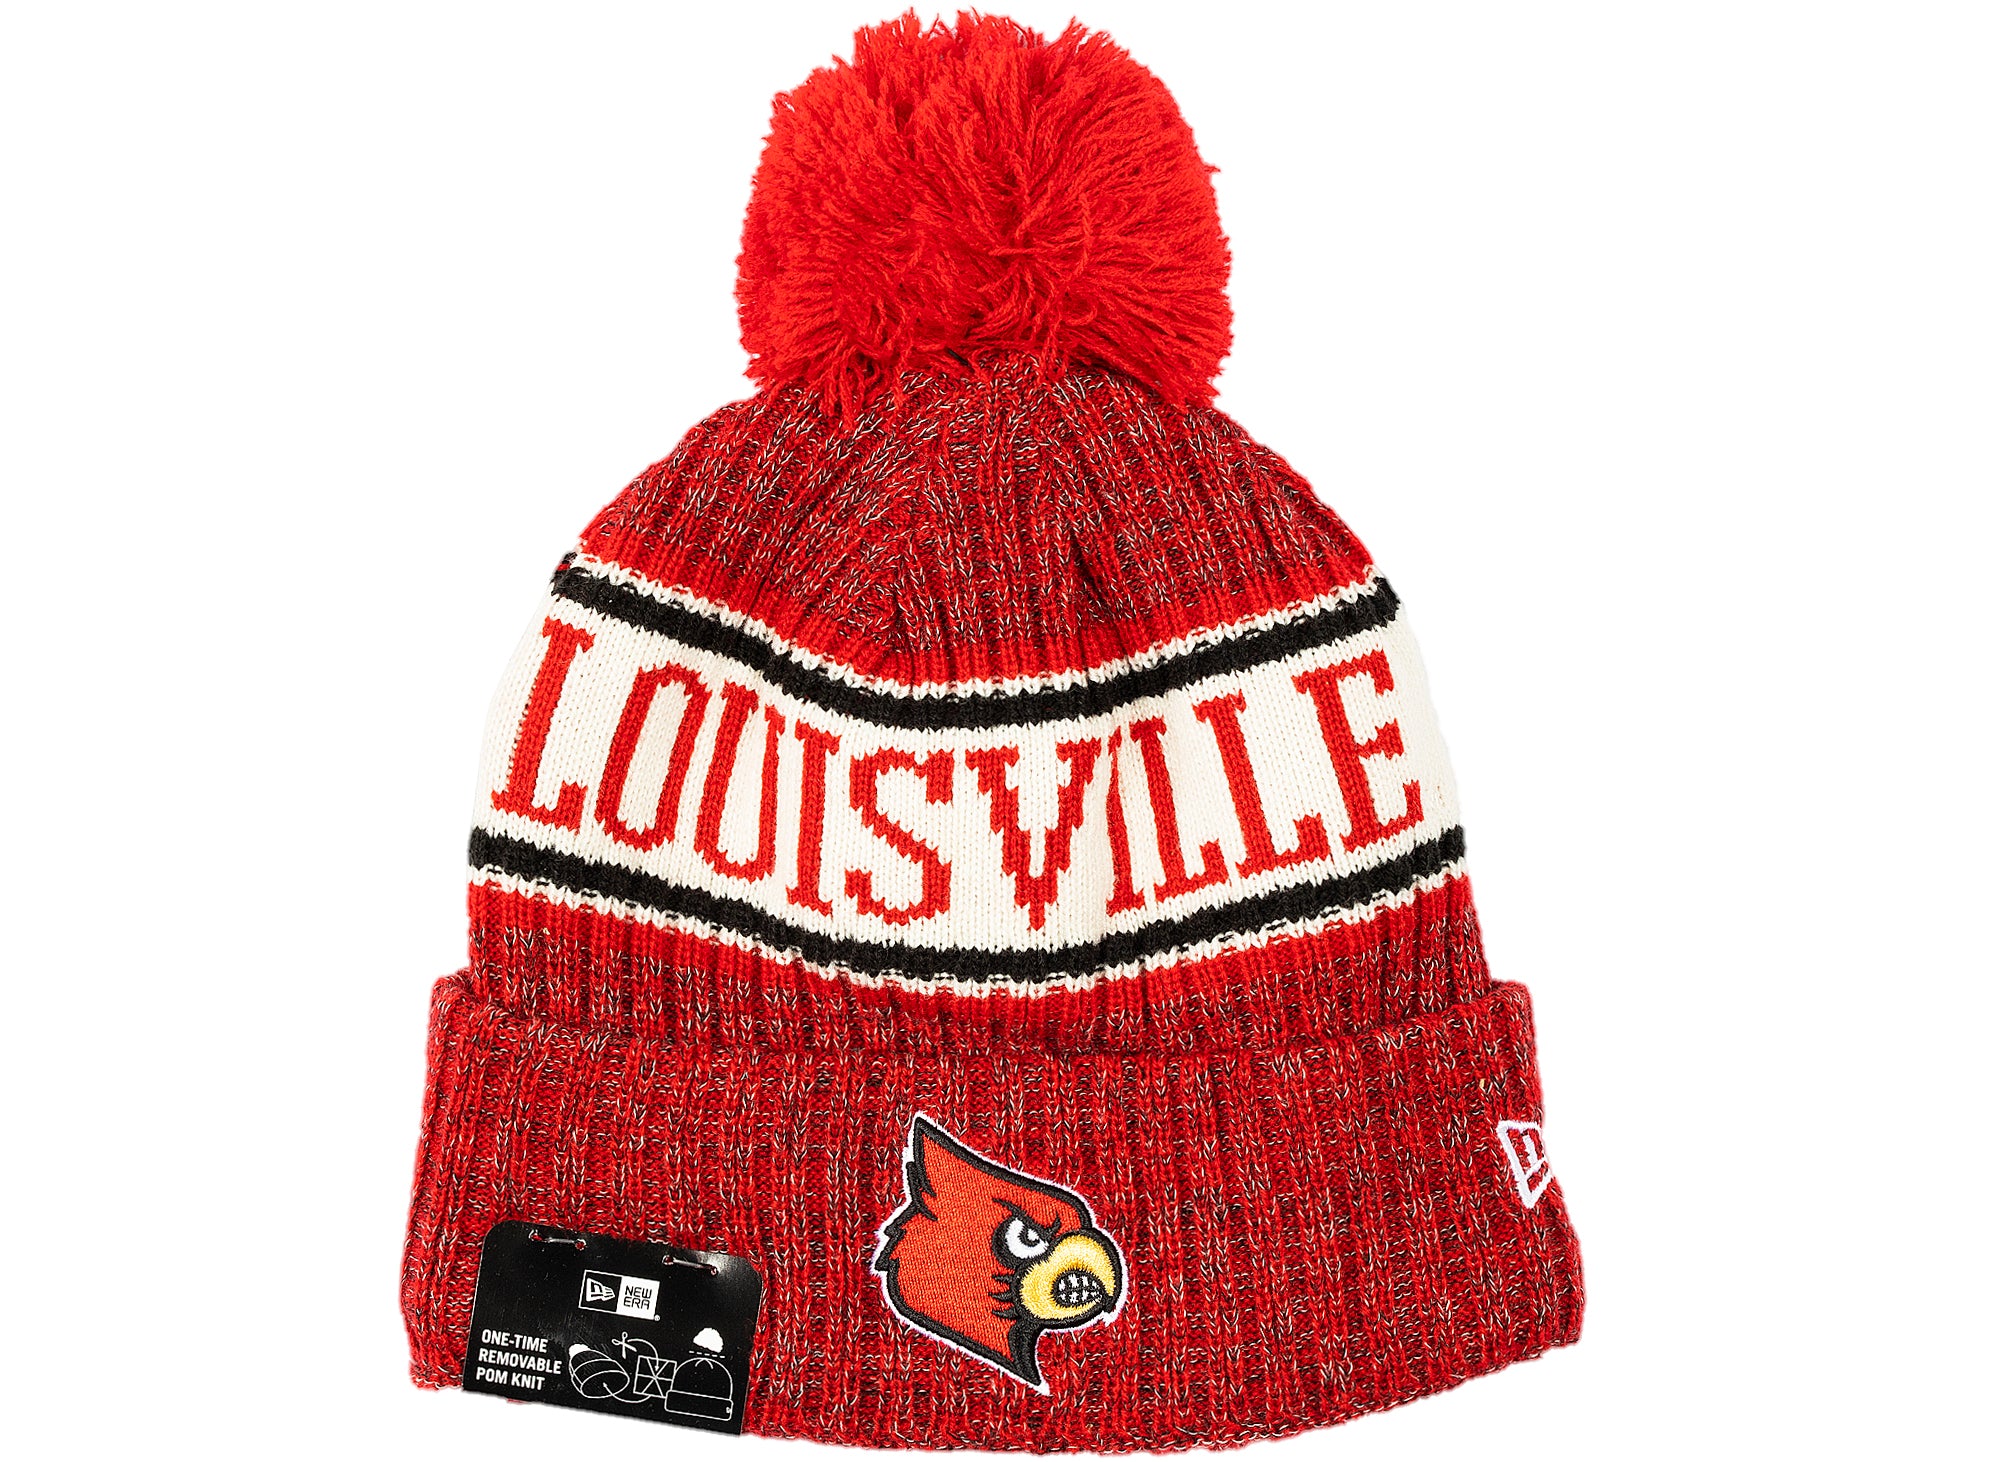 NWT University of Louisville UofL Cardinals Winter Beanie Hat Cap by adidas